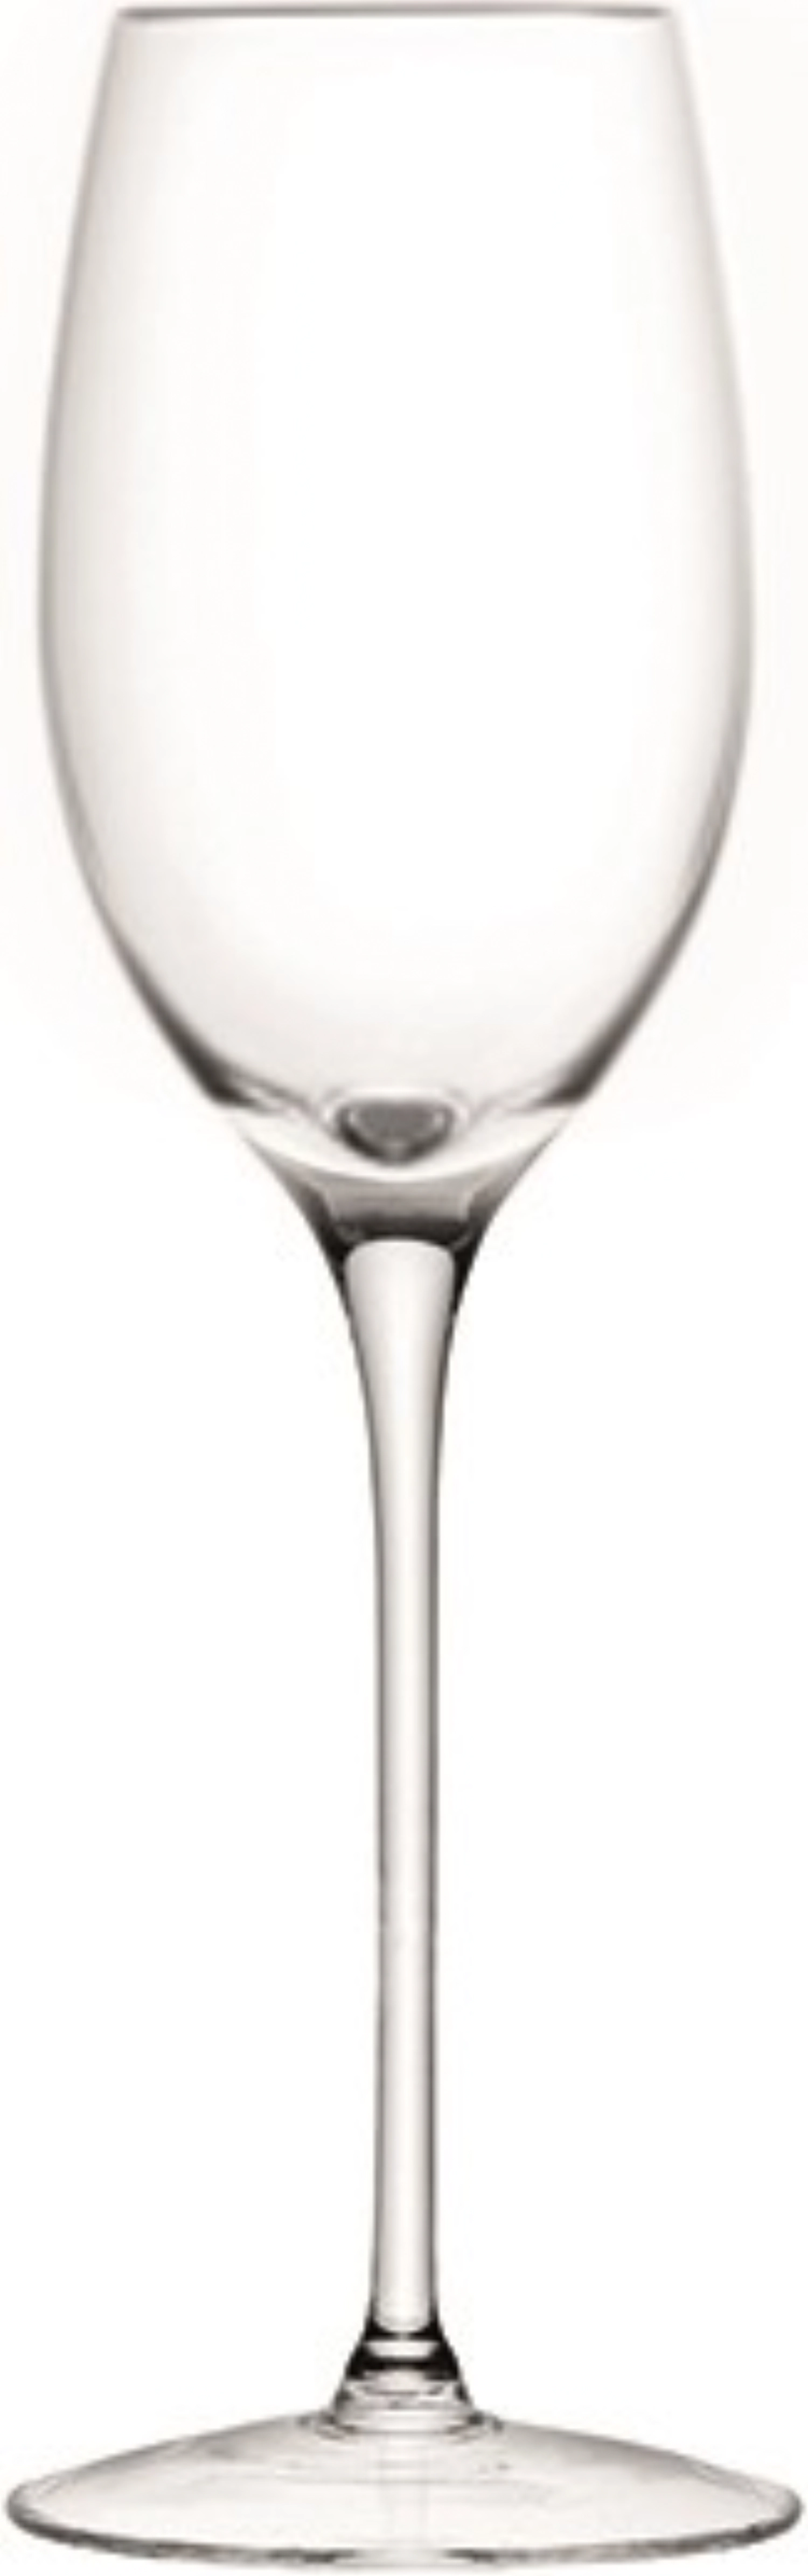 2er Set Wine Weissweinglas